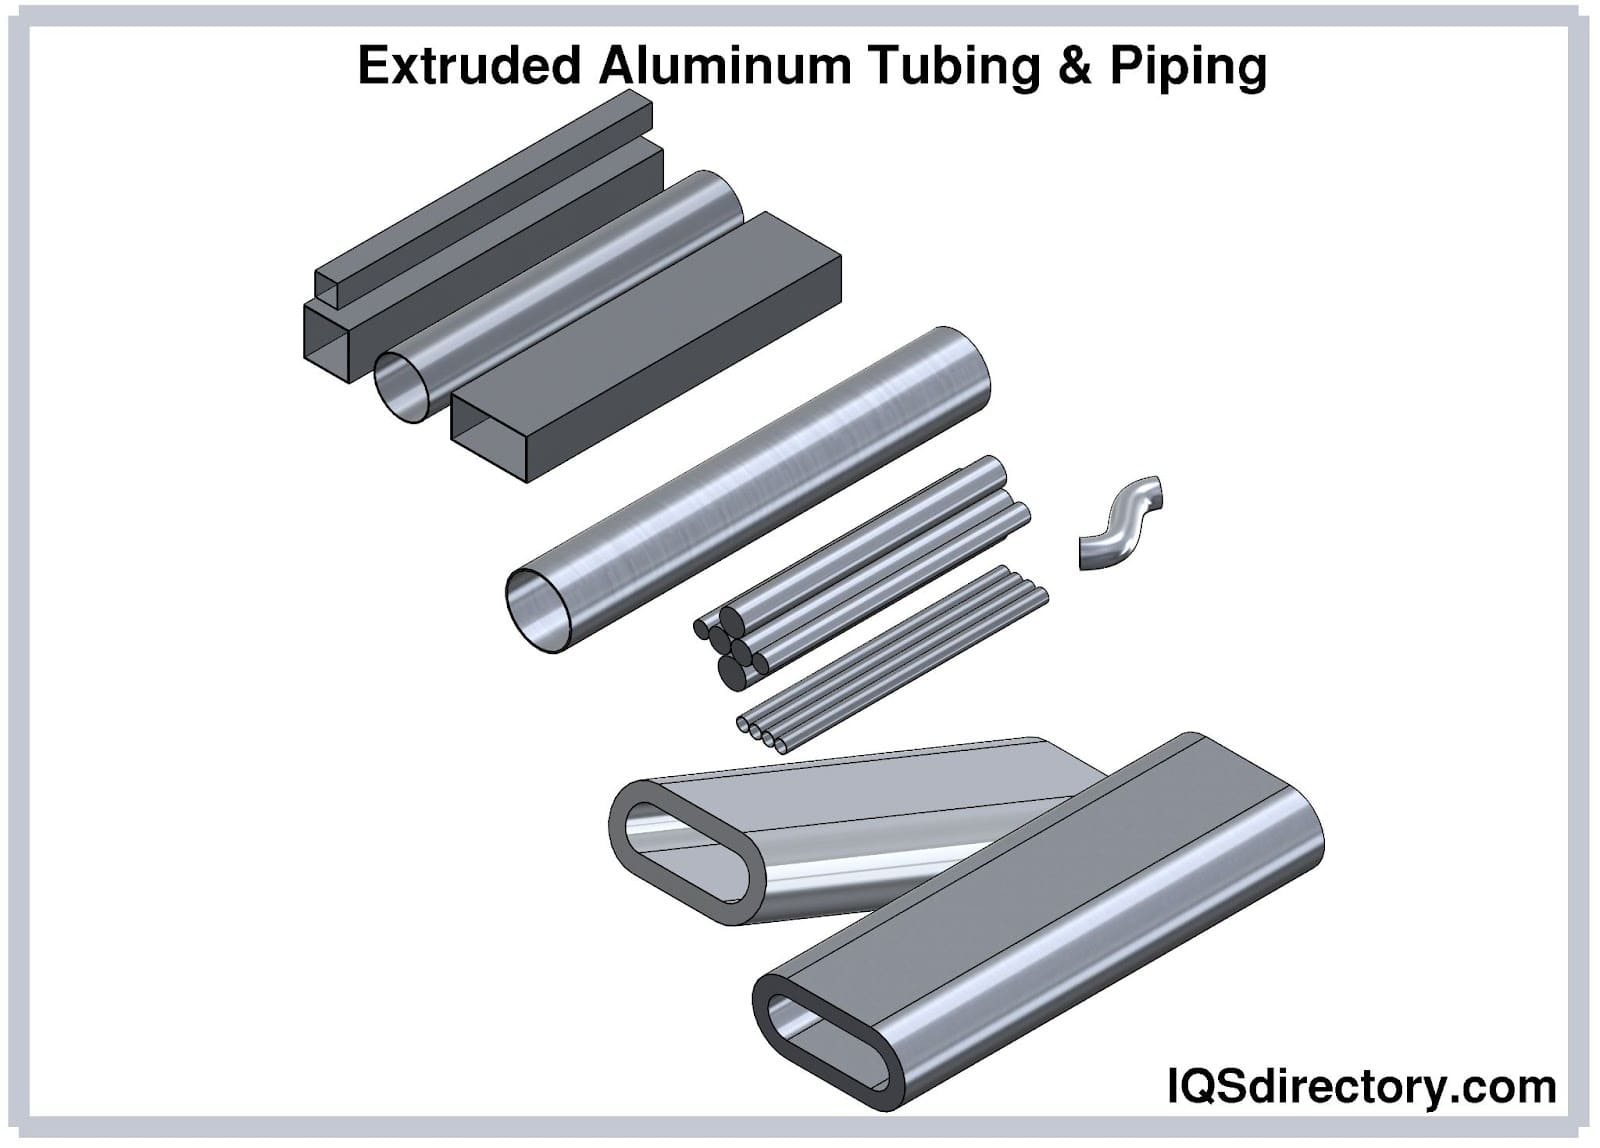 https://www.iqsdirectory.com/articles/aluminum-metal/aluminum-tubing-and-aluminum-pipe/extruded-aluminum-tubing-and-piping.jpg